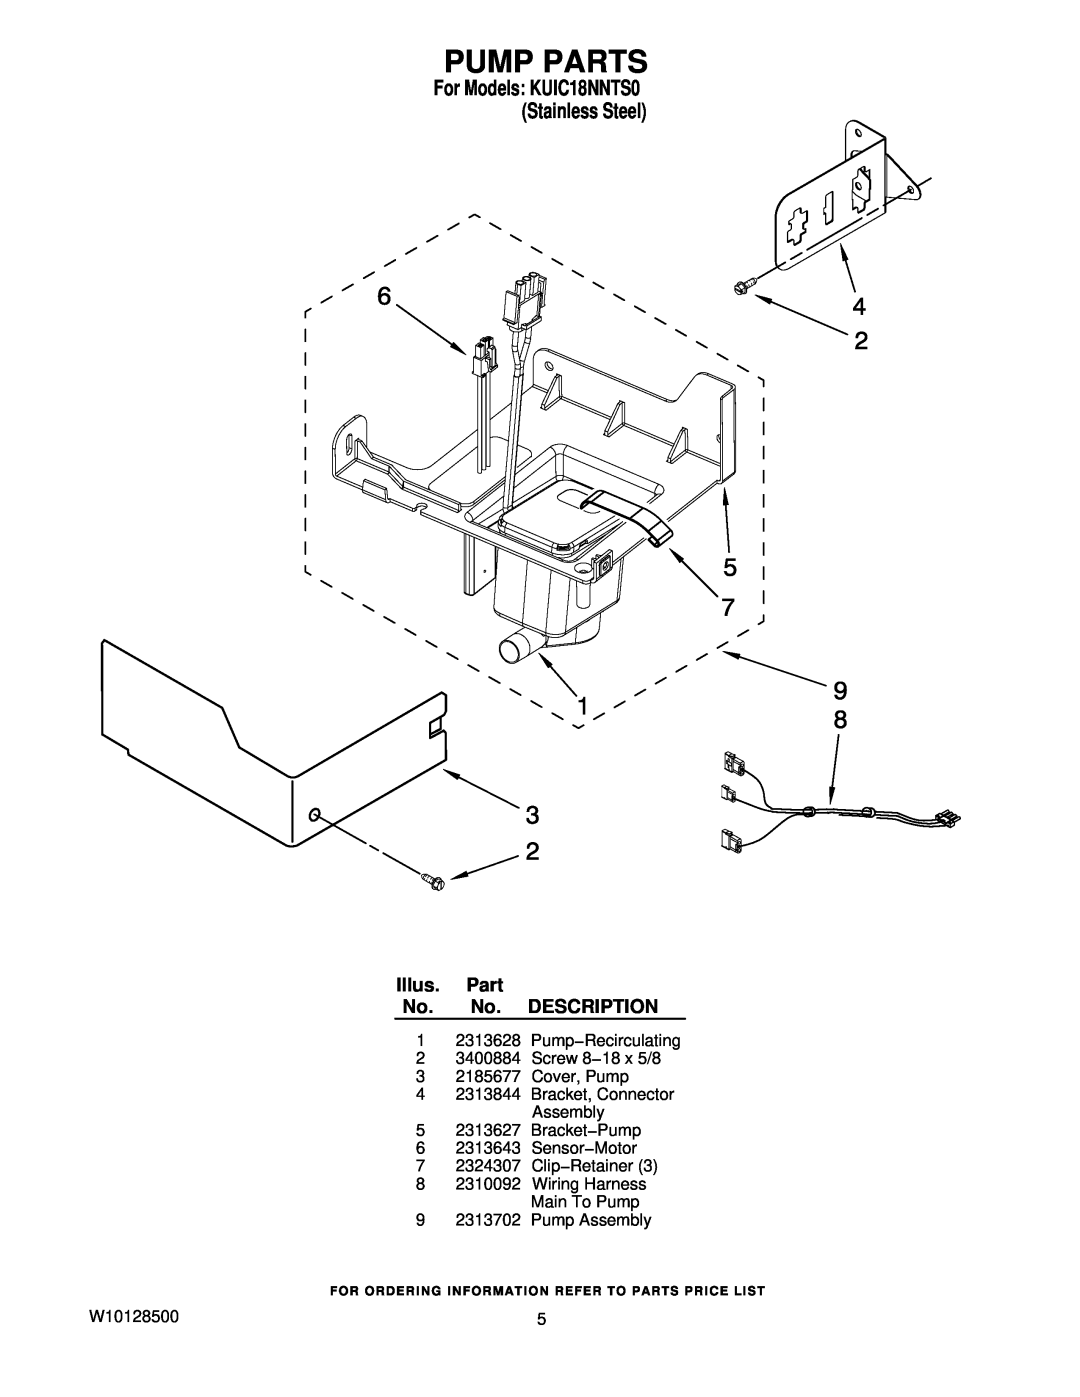 KitchenAid manual Pump Parts, Illus. Part No. No. DESCRIPTION, For Models KUIC18NNTS0 Stainless Steel 